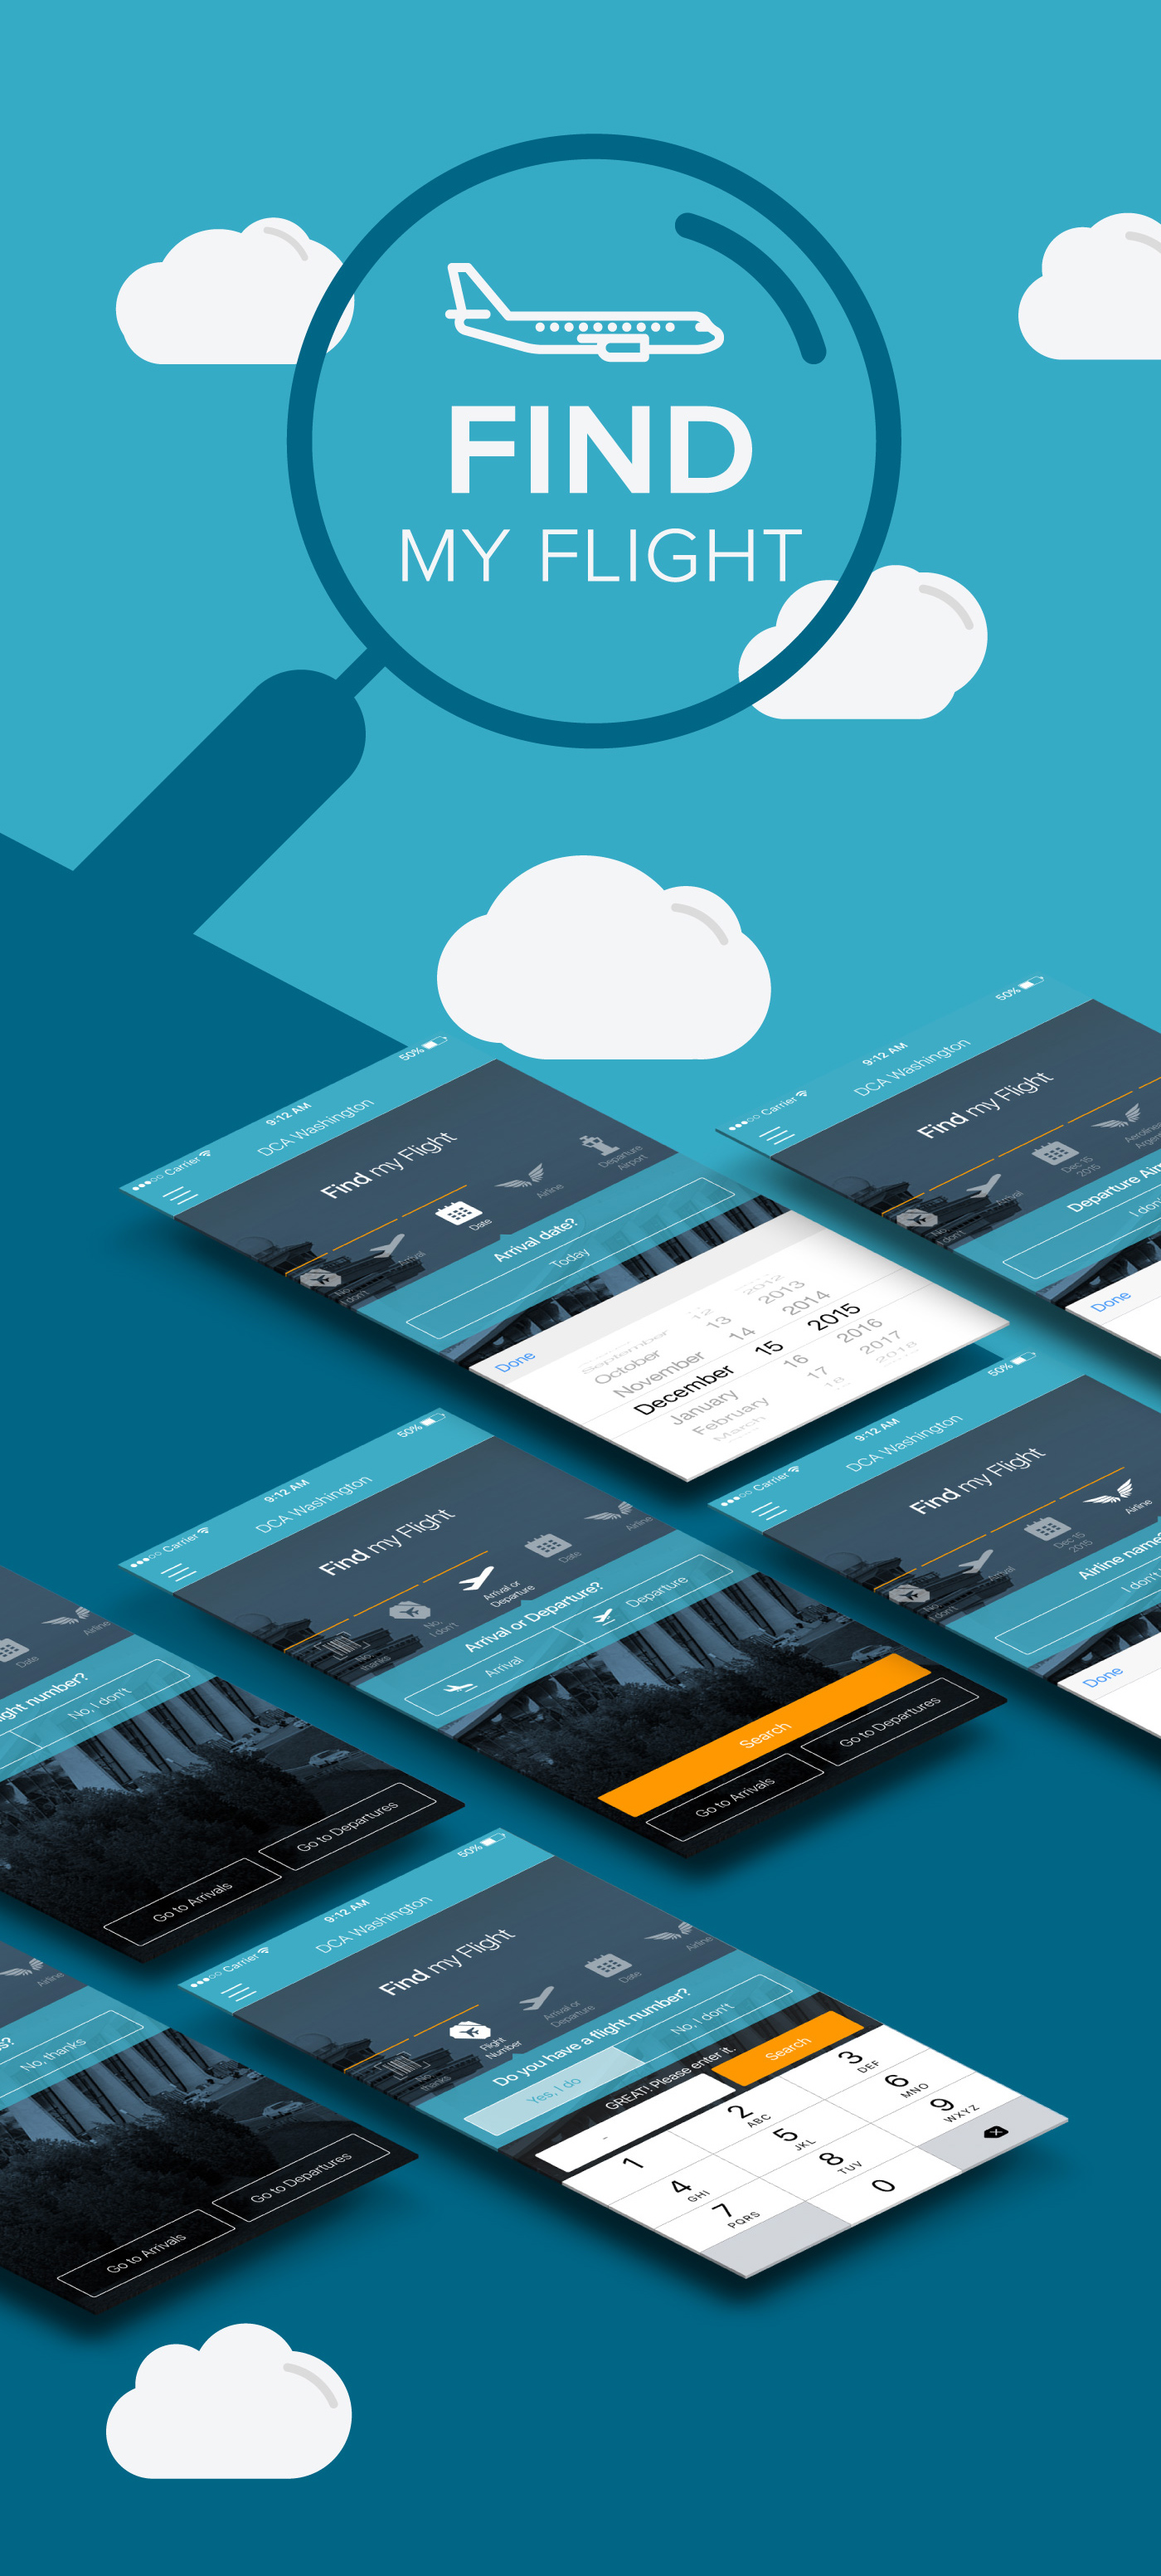 Mobile app airport flight ux UI mobile design Interaction design  product design 